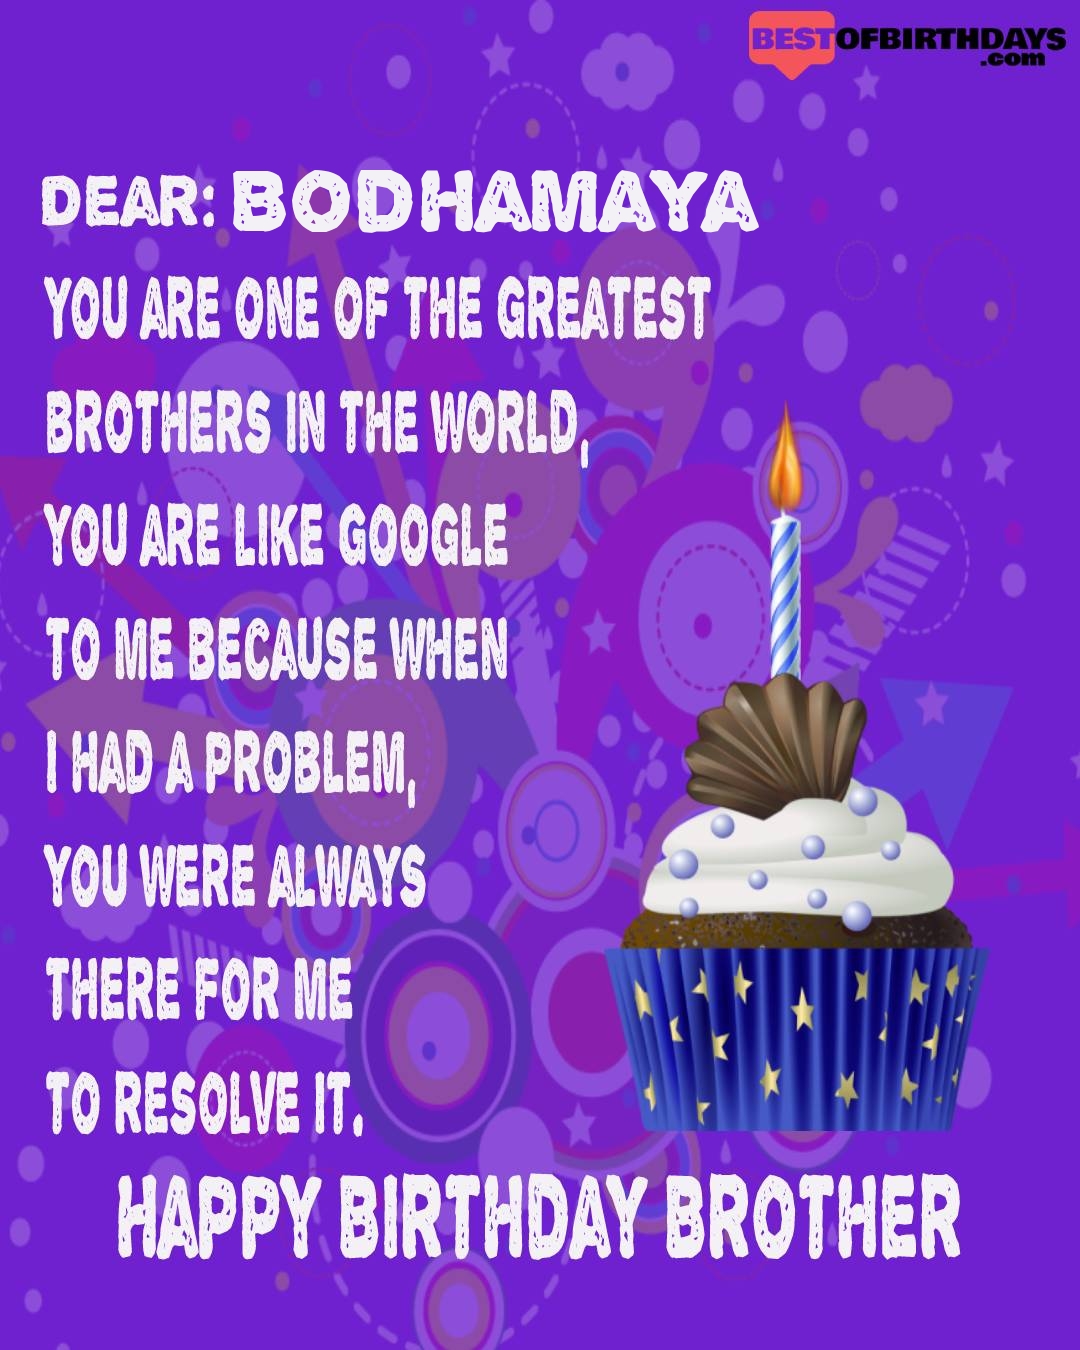 Happy birthday bodhamaya bhai brother bro